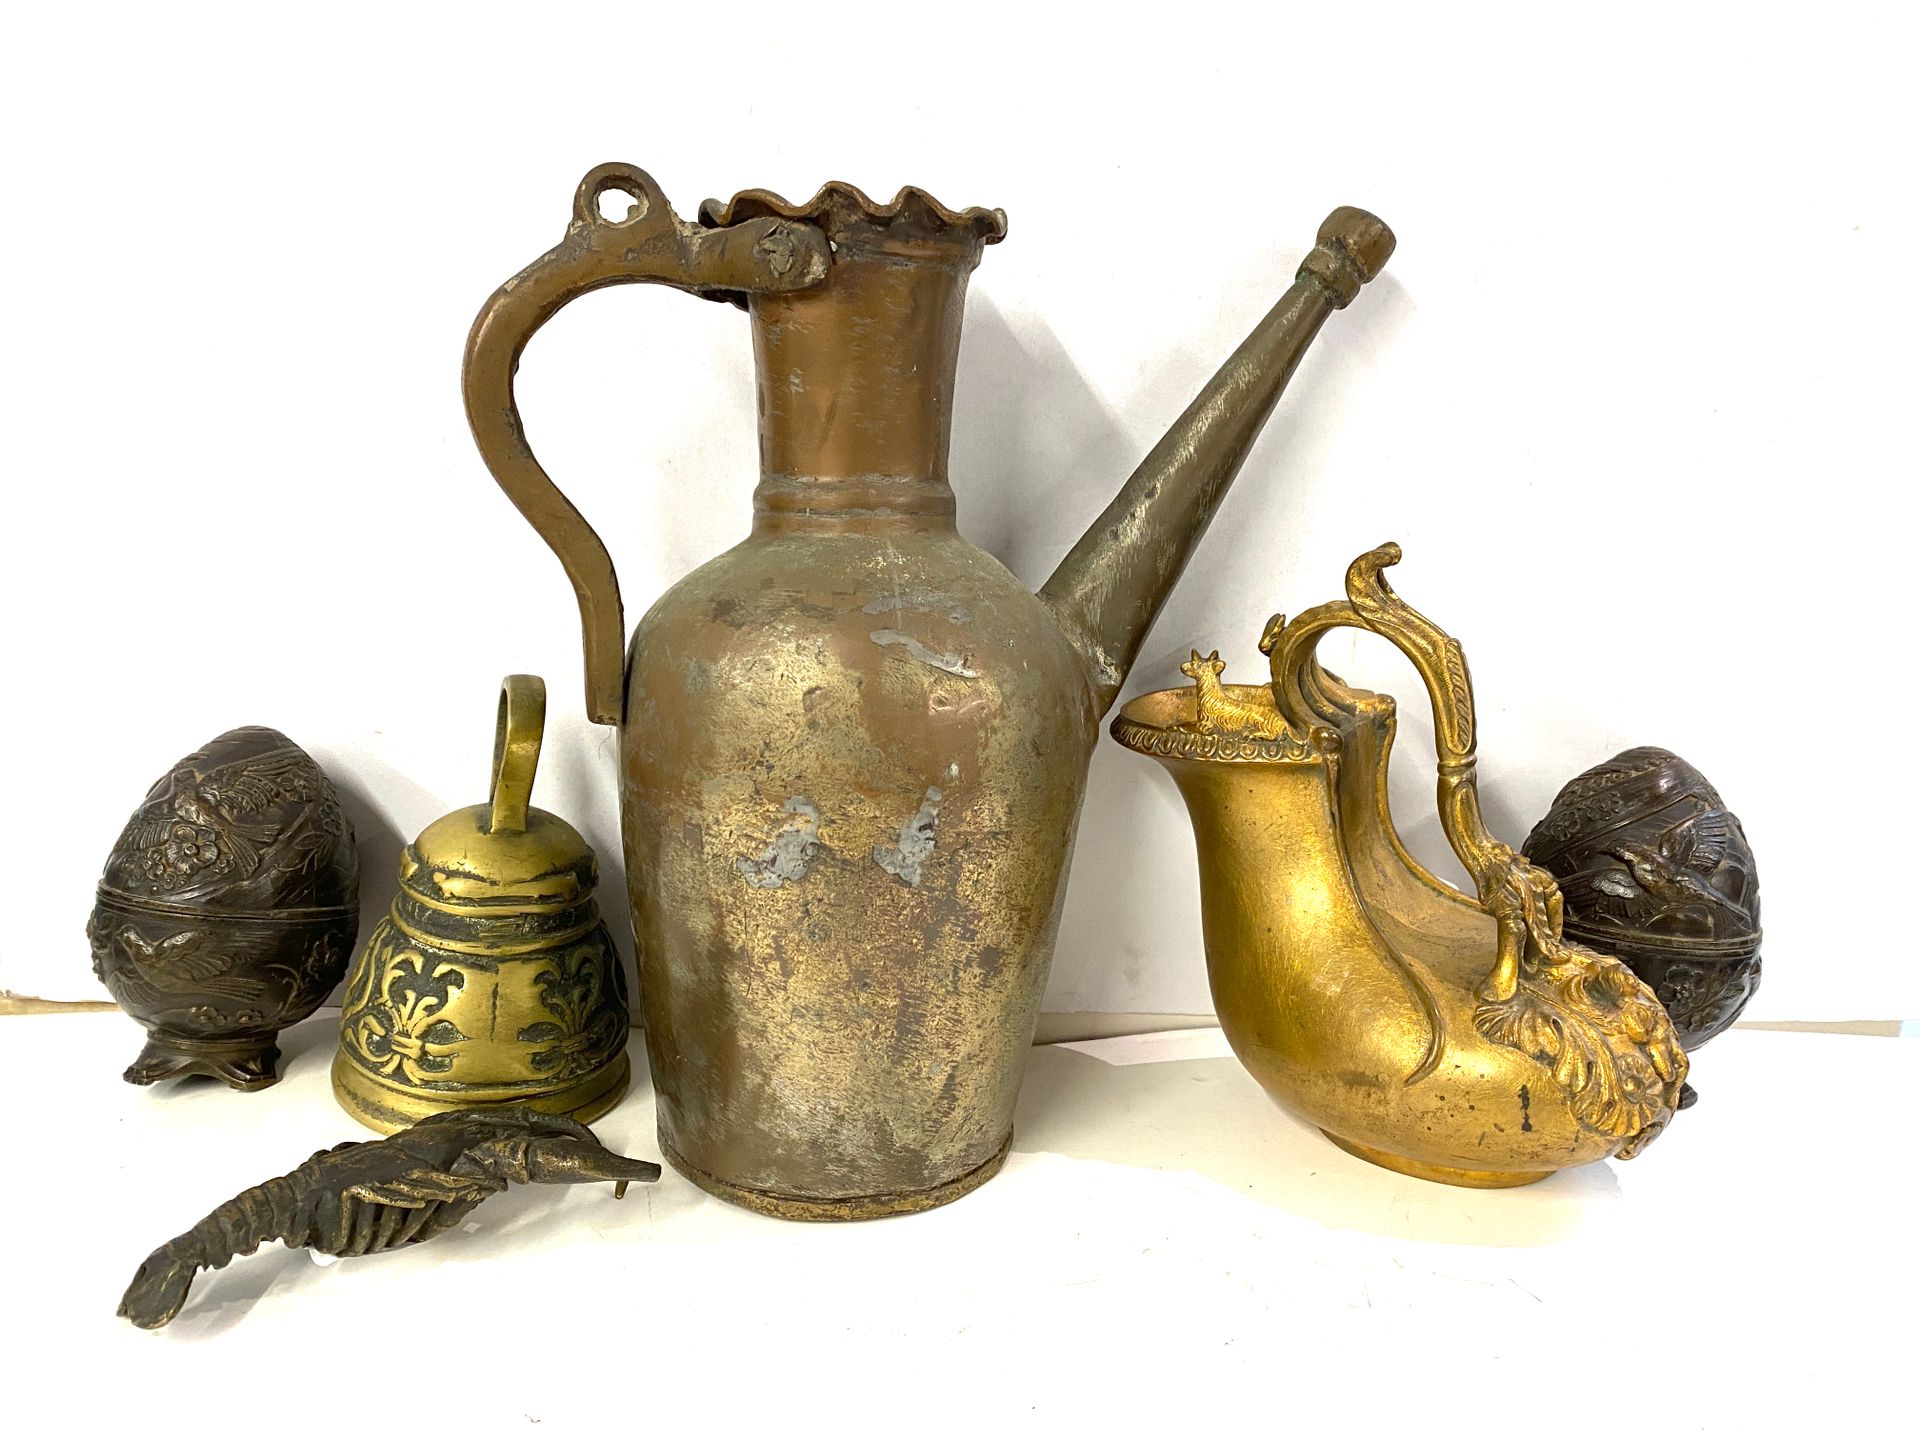 Null 套装包括一个铜钟，一个青铜小龙虾，一对蛋盒，一个金属壶和一个古董风格的青铜花瓶

事故和丢失的零件